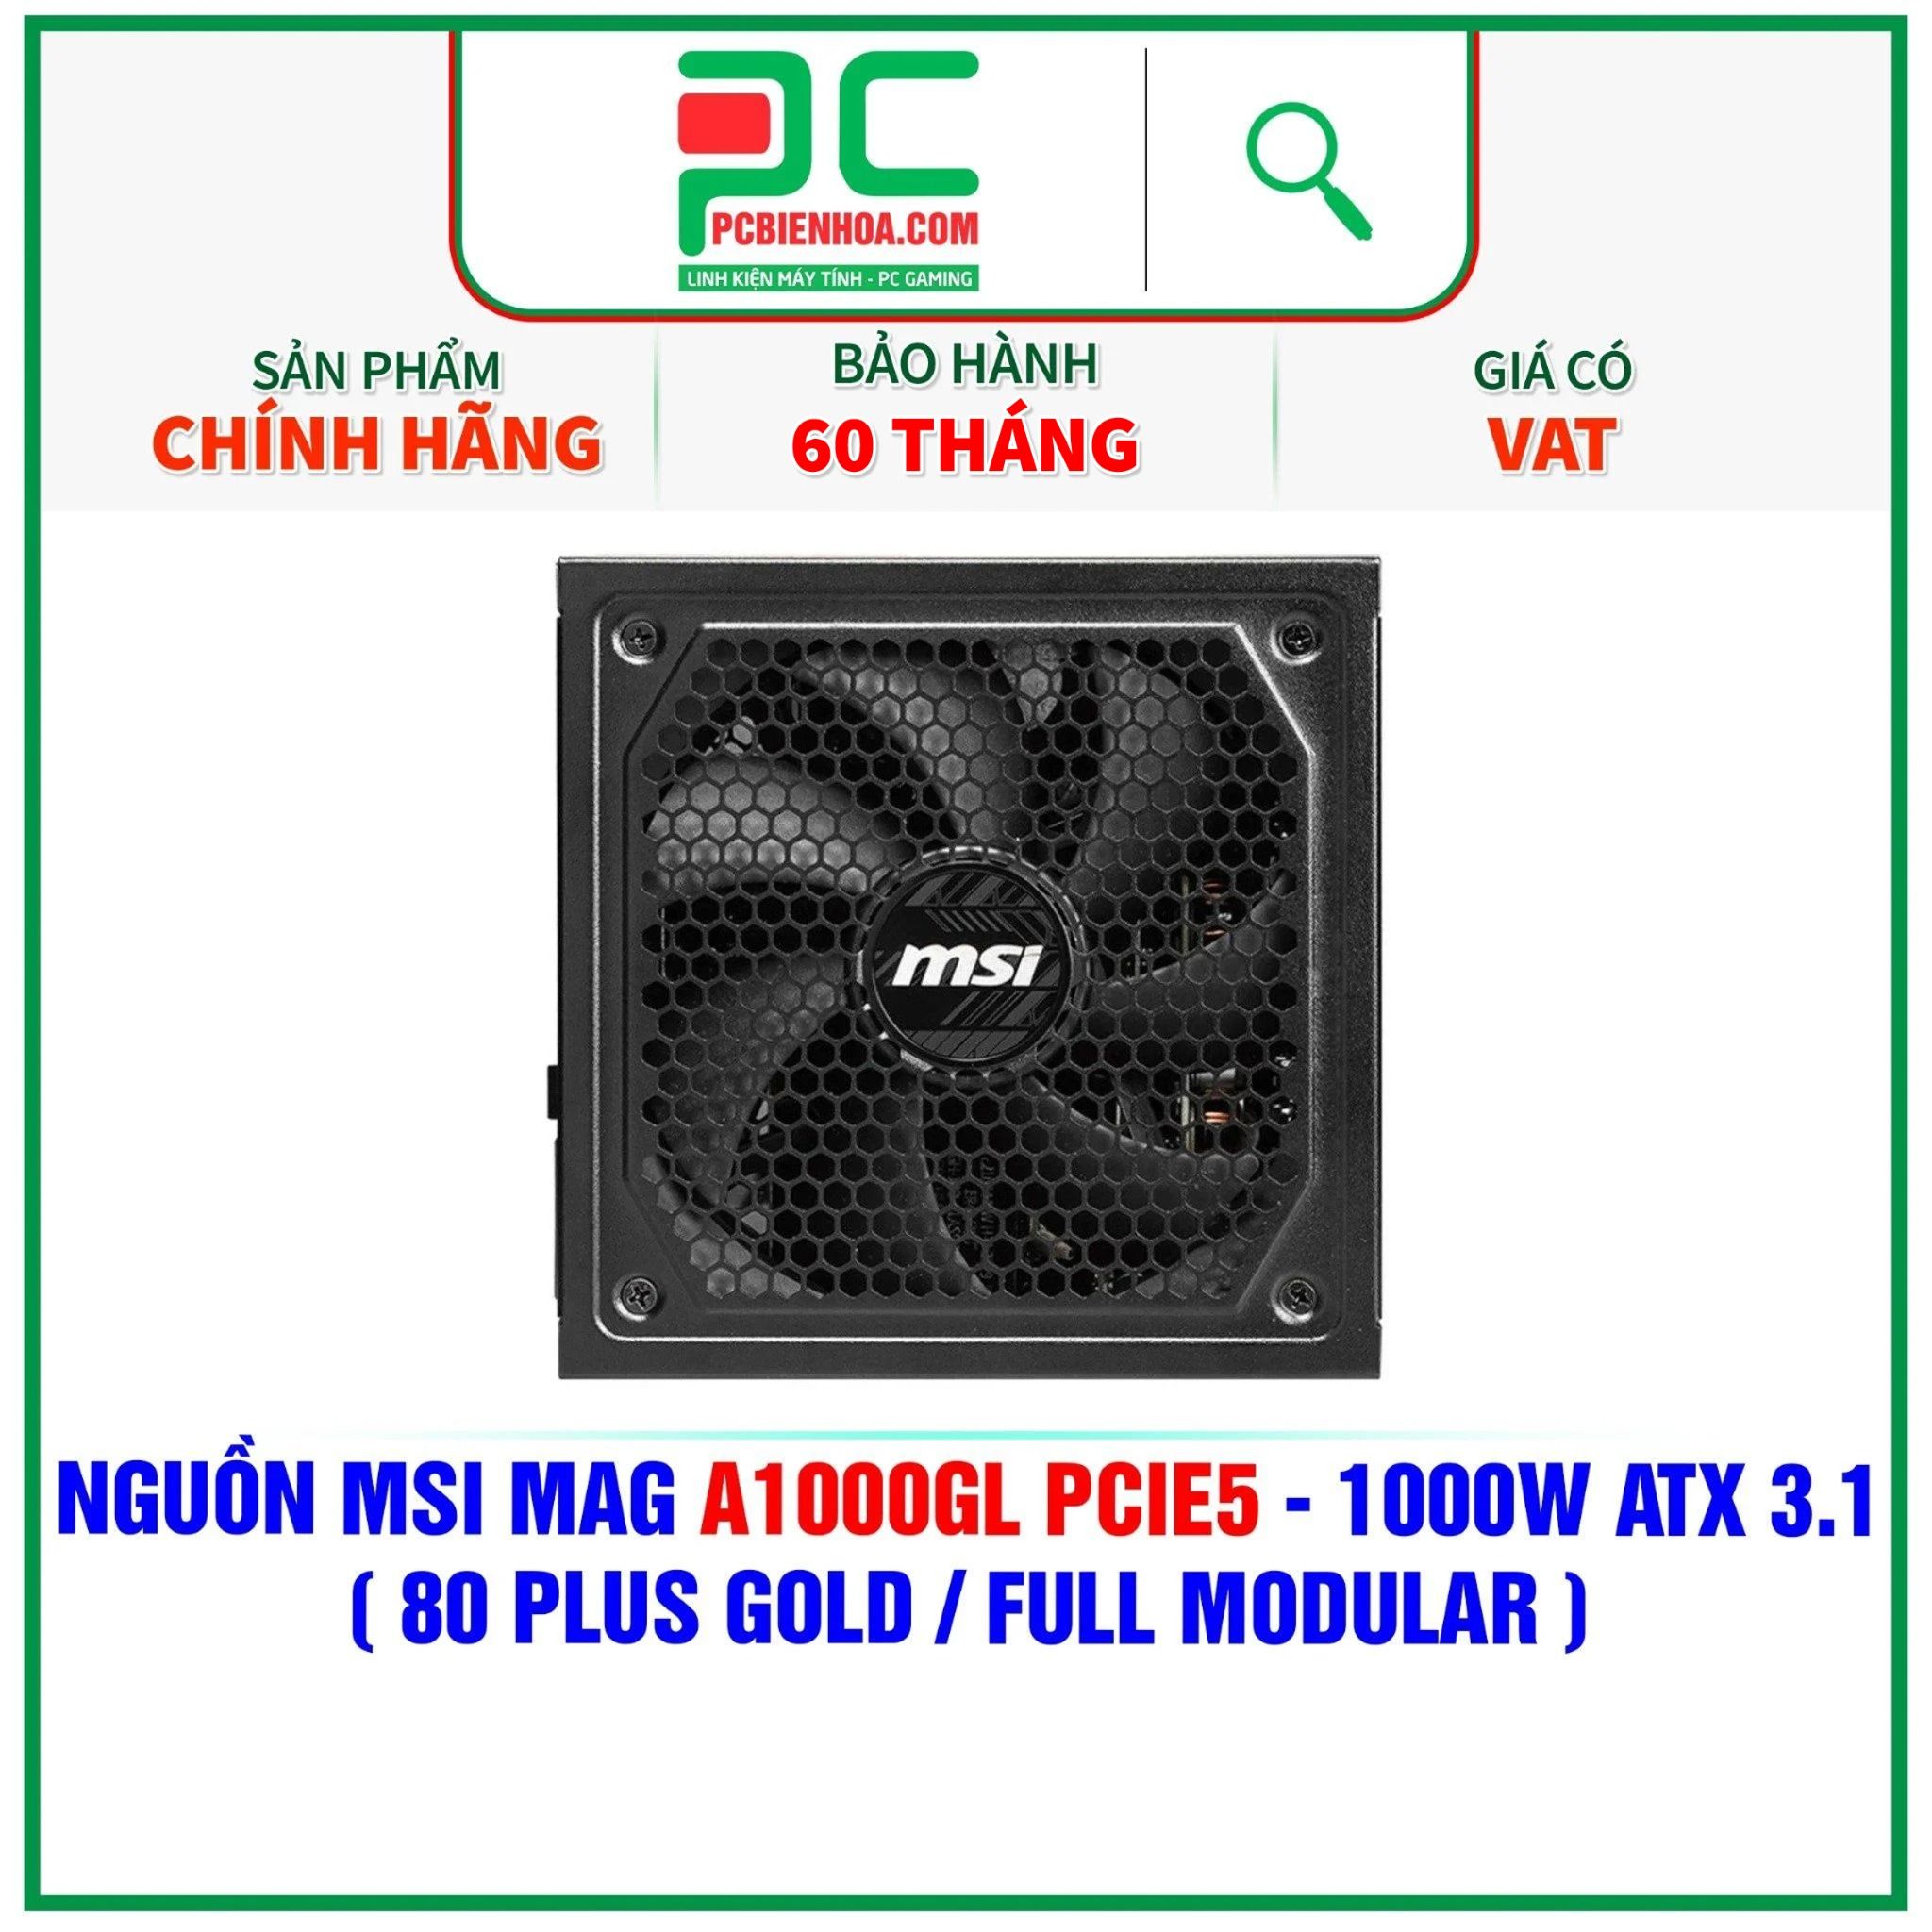  NGUỒN MSI MAG A1000GL PCIE5 - 1000W ATX 3.1 ( 80PLUS GOLD / FULL MODULAR ) 